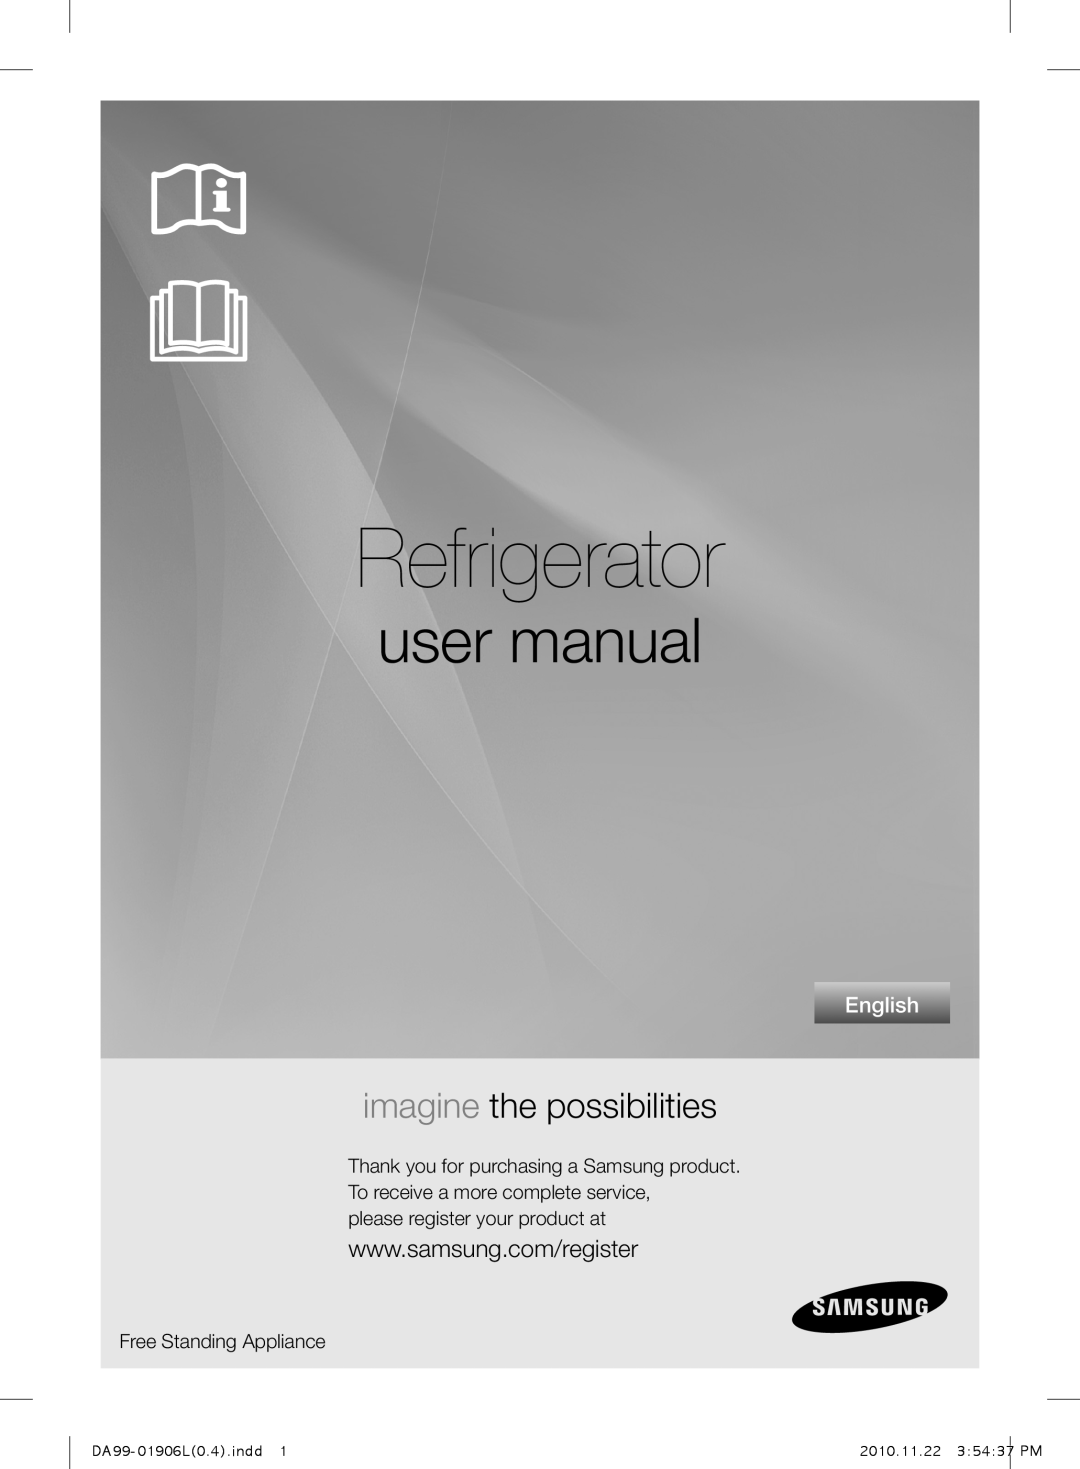 Samsung RT59PMSW1/XEF manual Refrigerator, user manual, imagine the possibilities, English, Code No. DA99-01906H REV0.4 